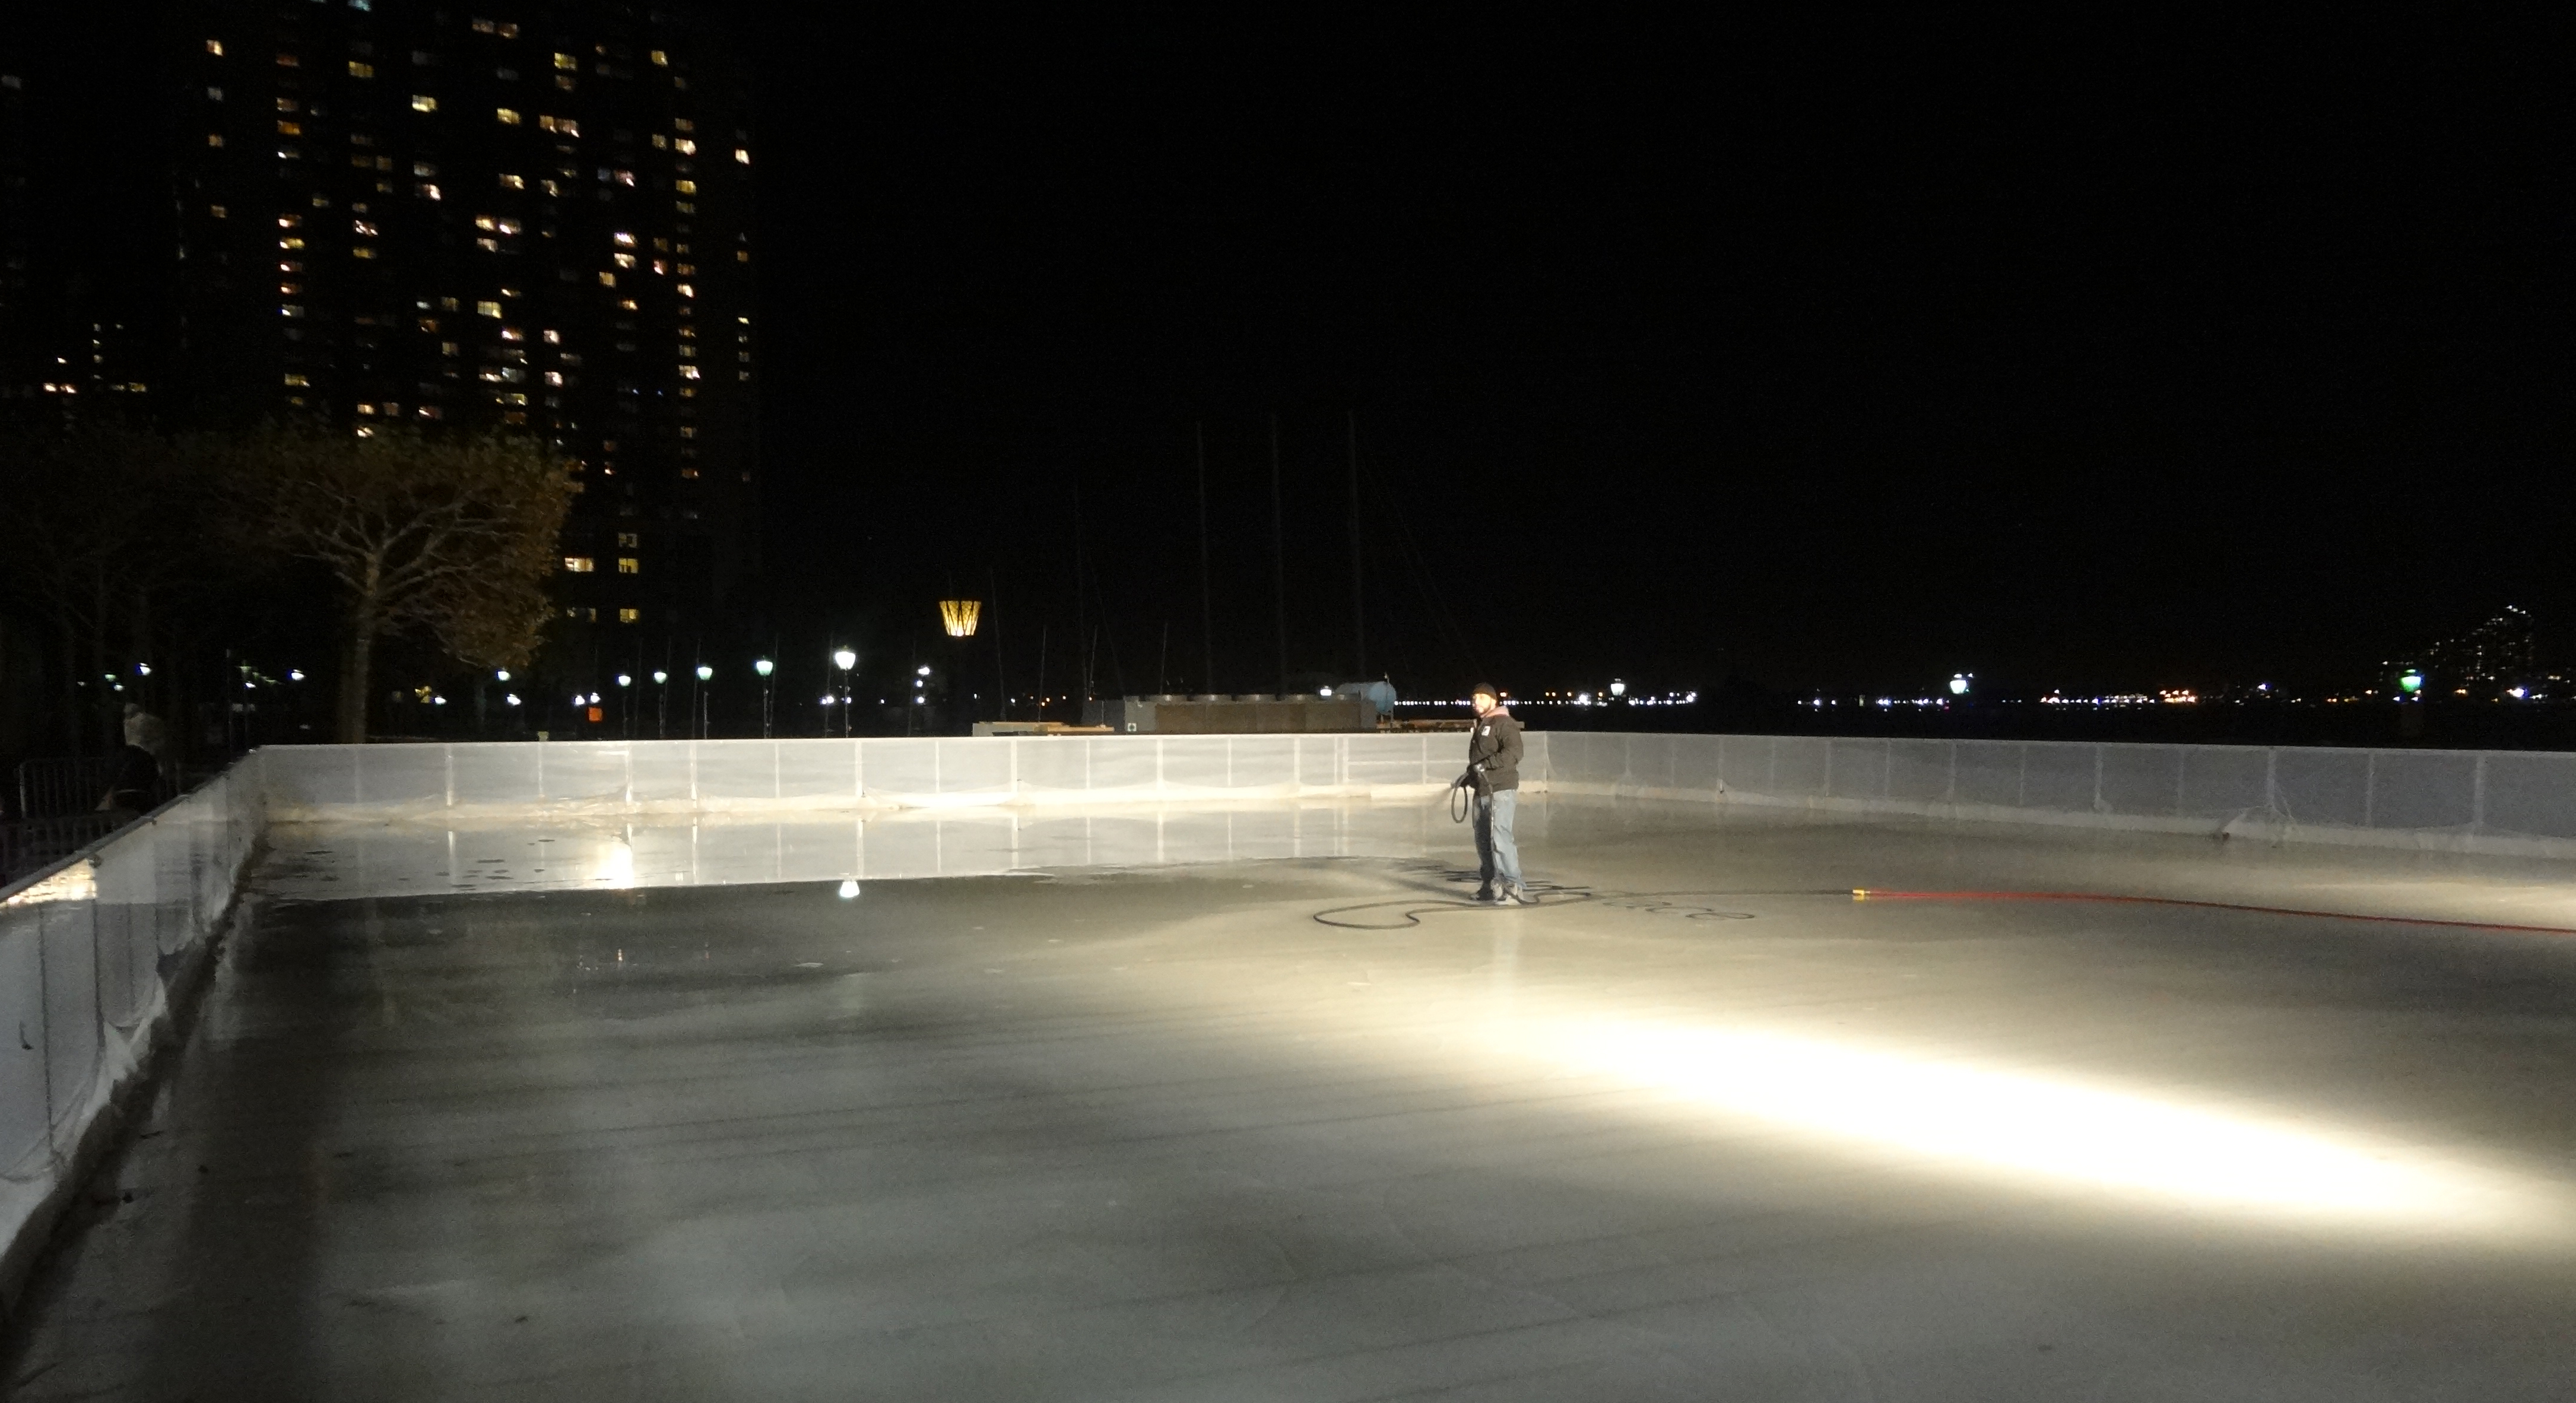 Ice rink 11-13-2013